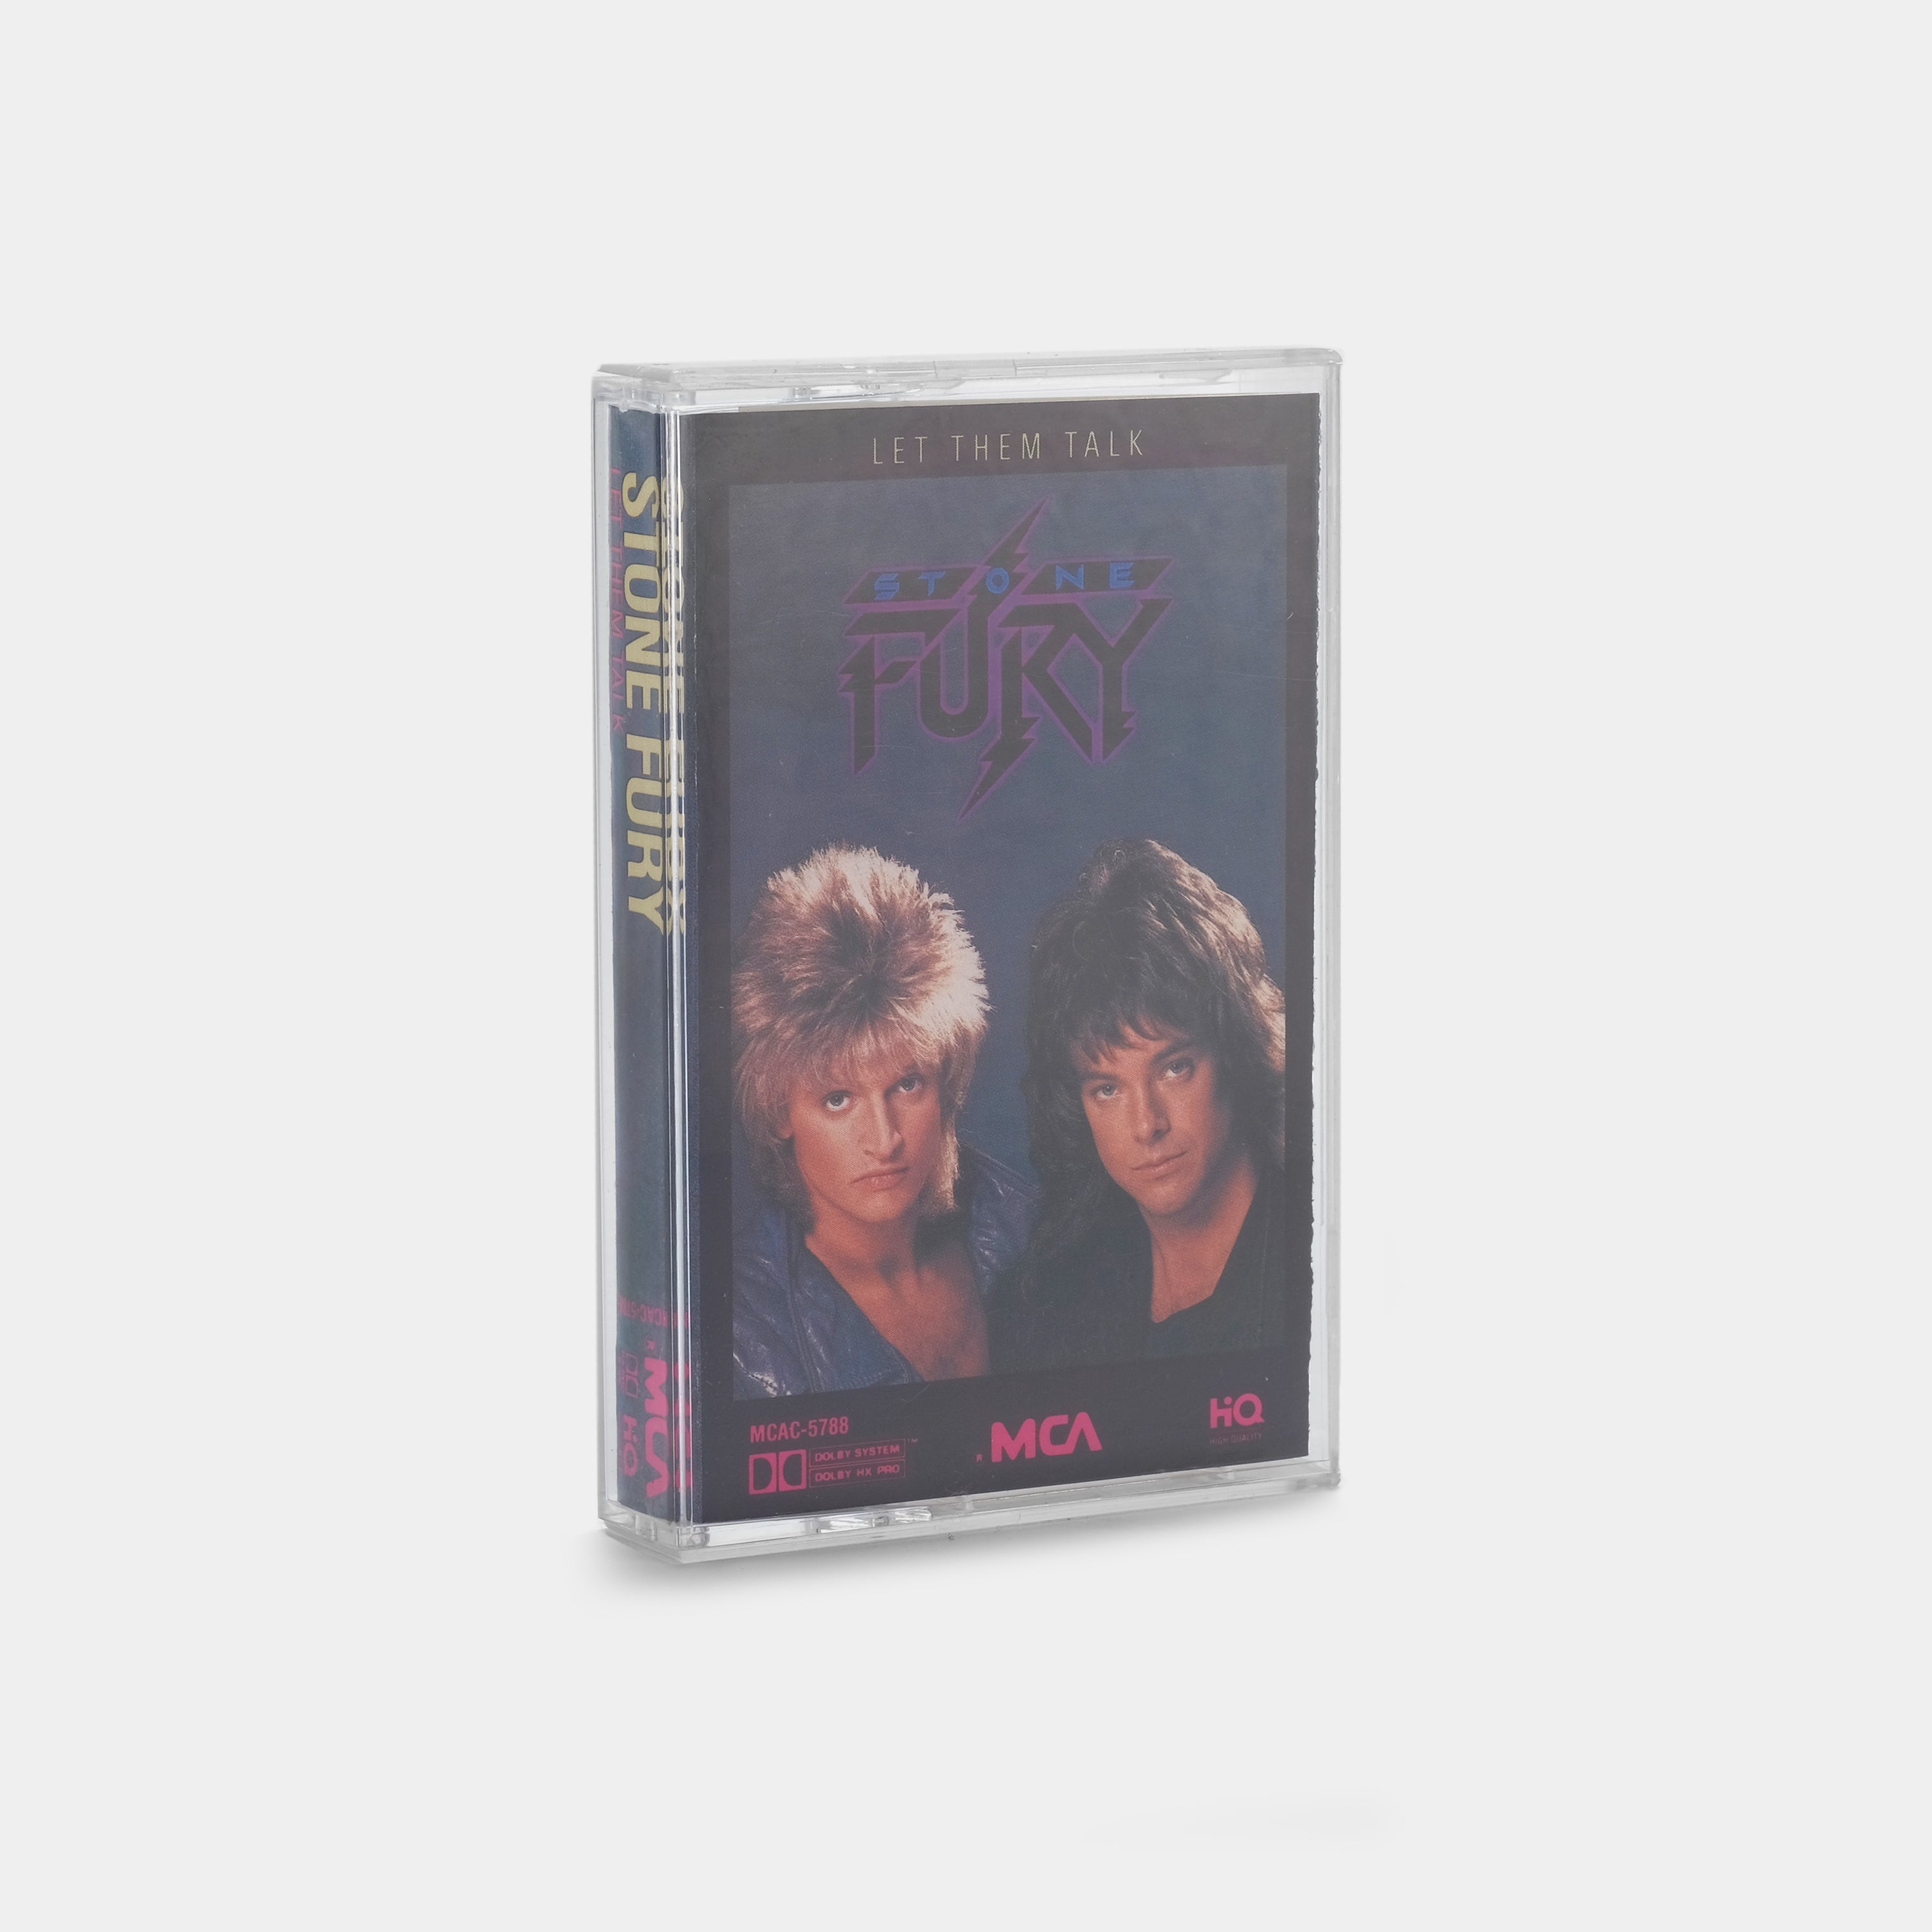 Stone Fury - Let Them Talk Cassette Tape